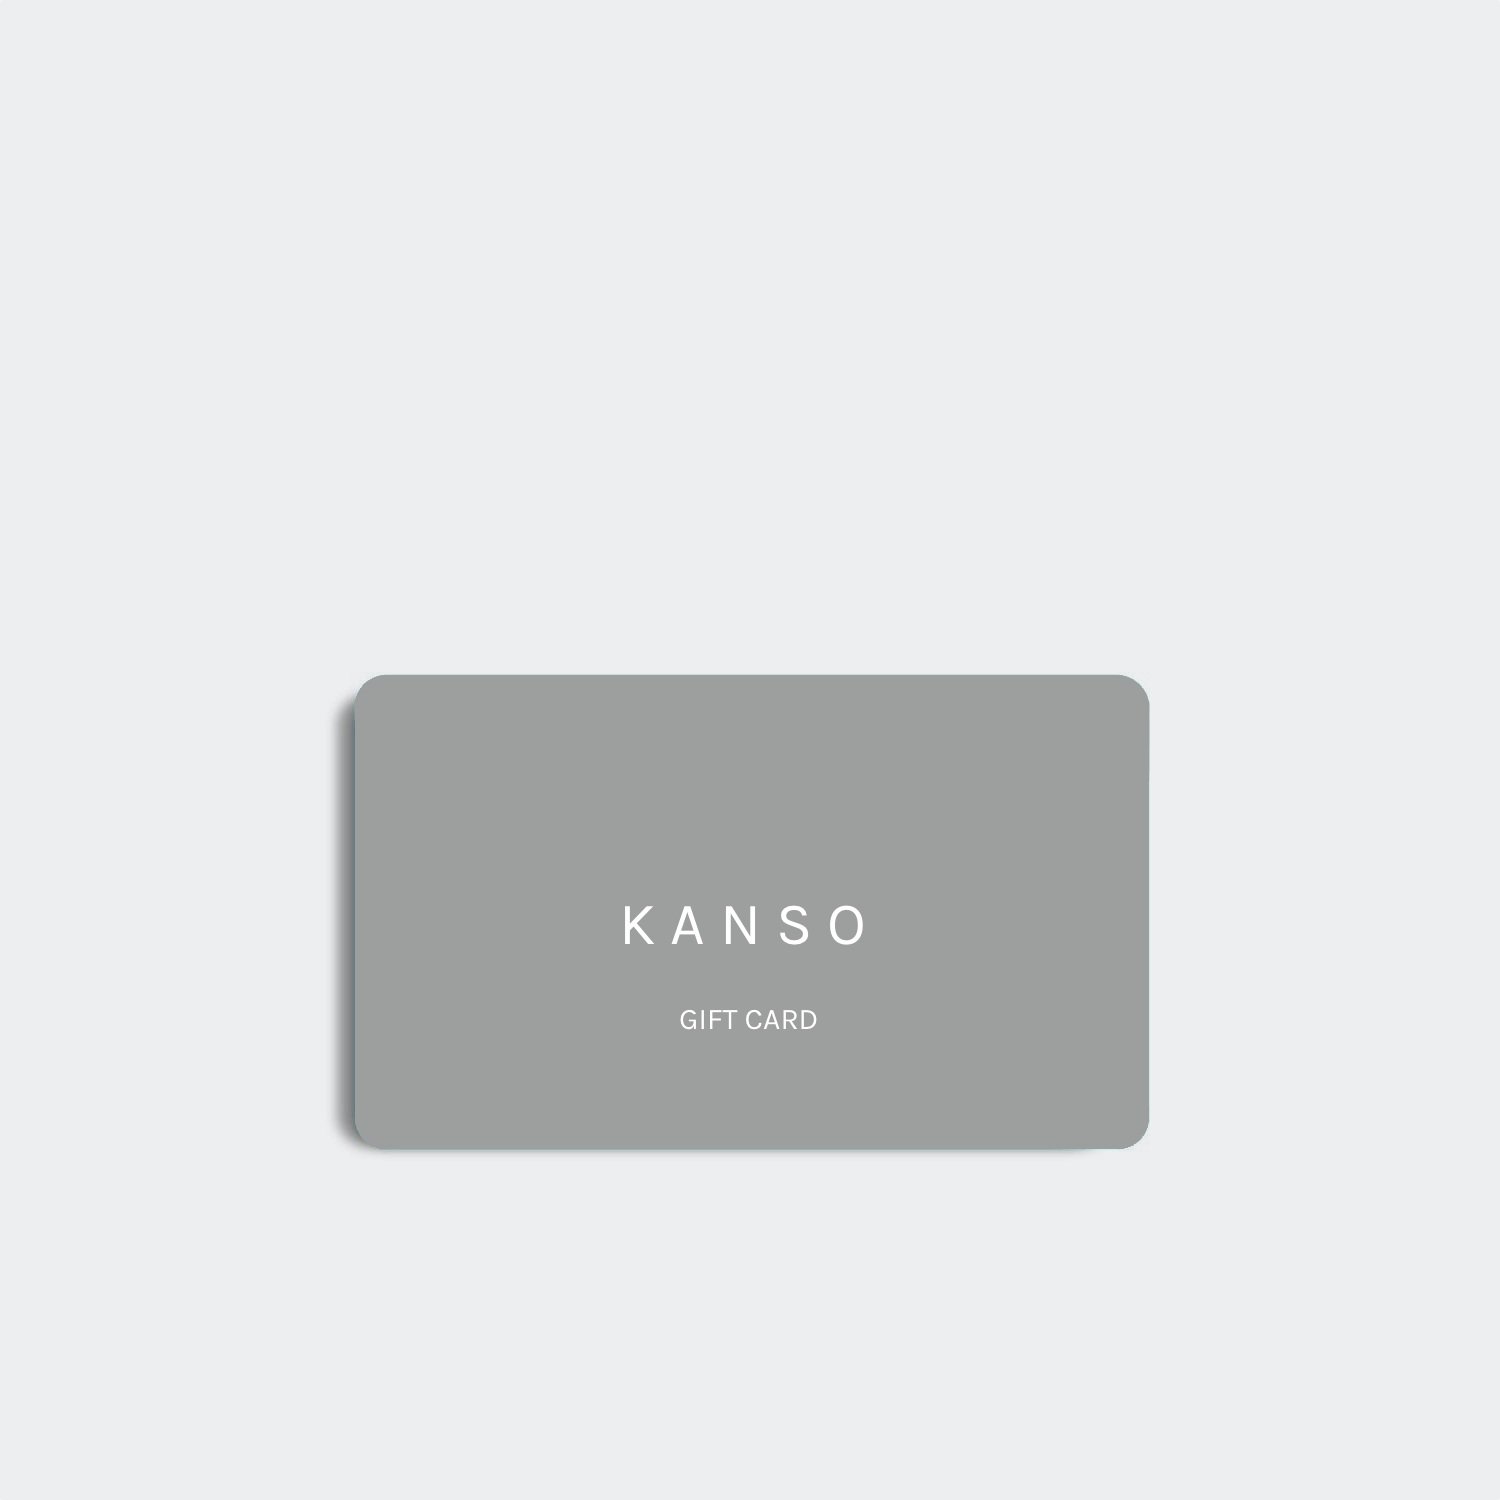 KANSO Gift Card - KANSO